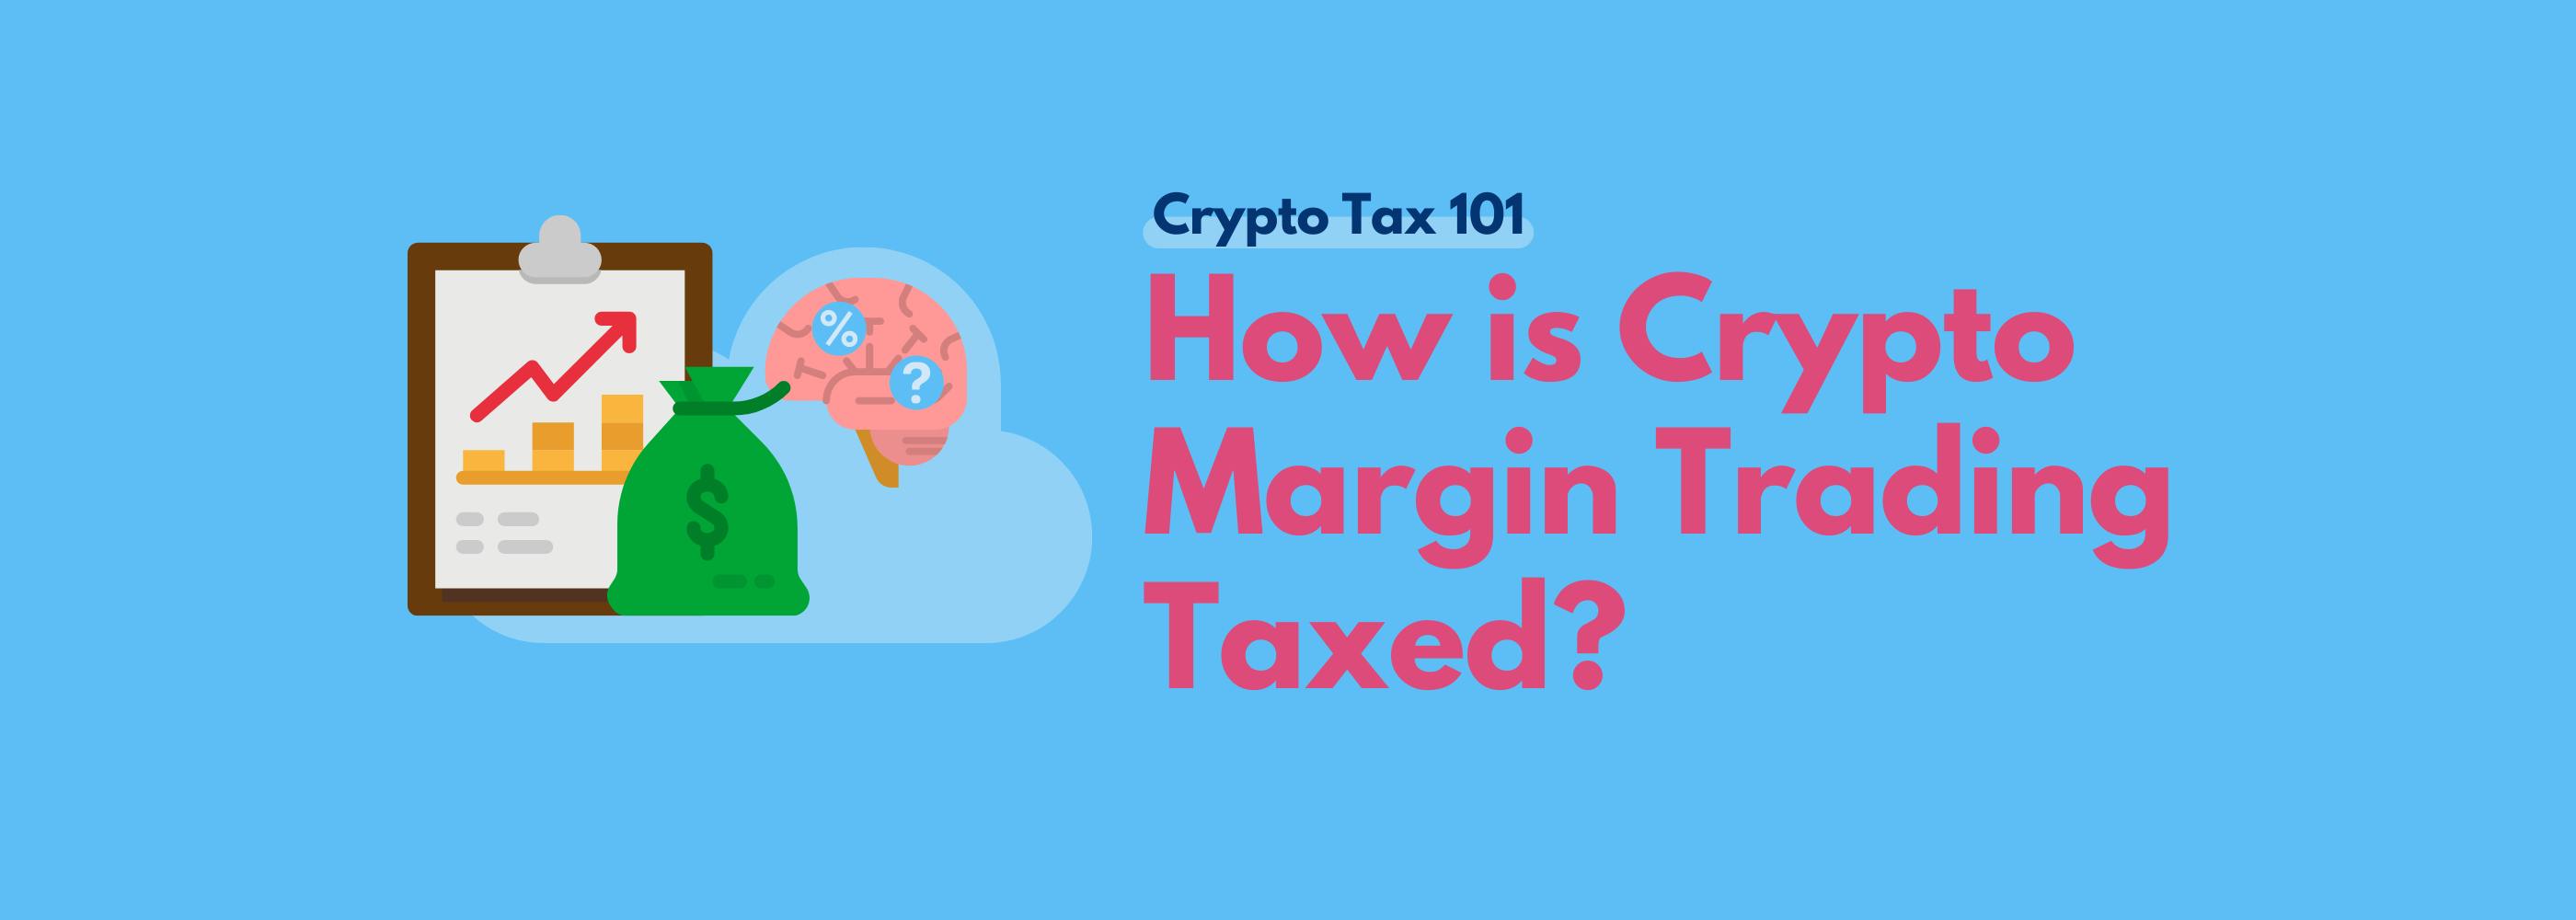 Koinly explains crypto margin trading taxes